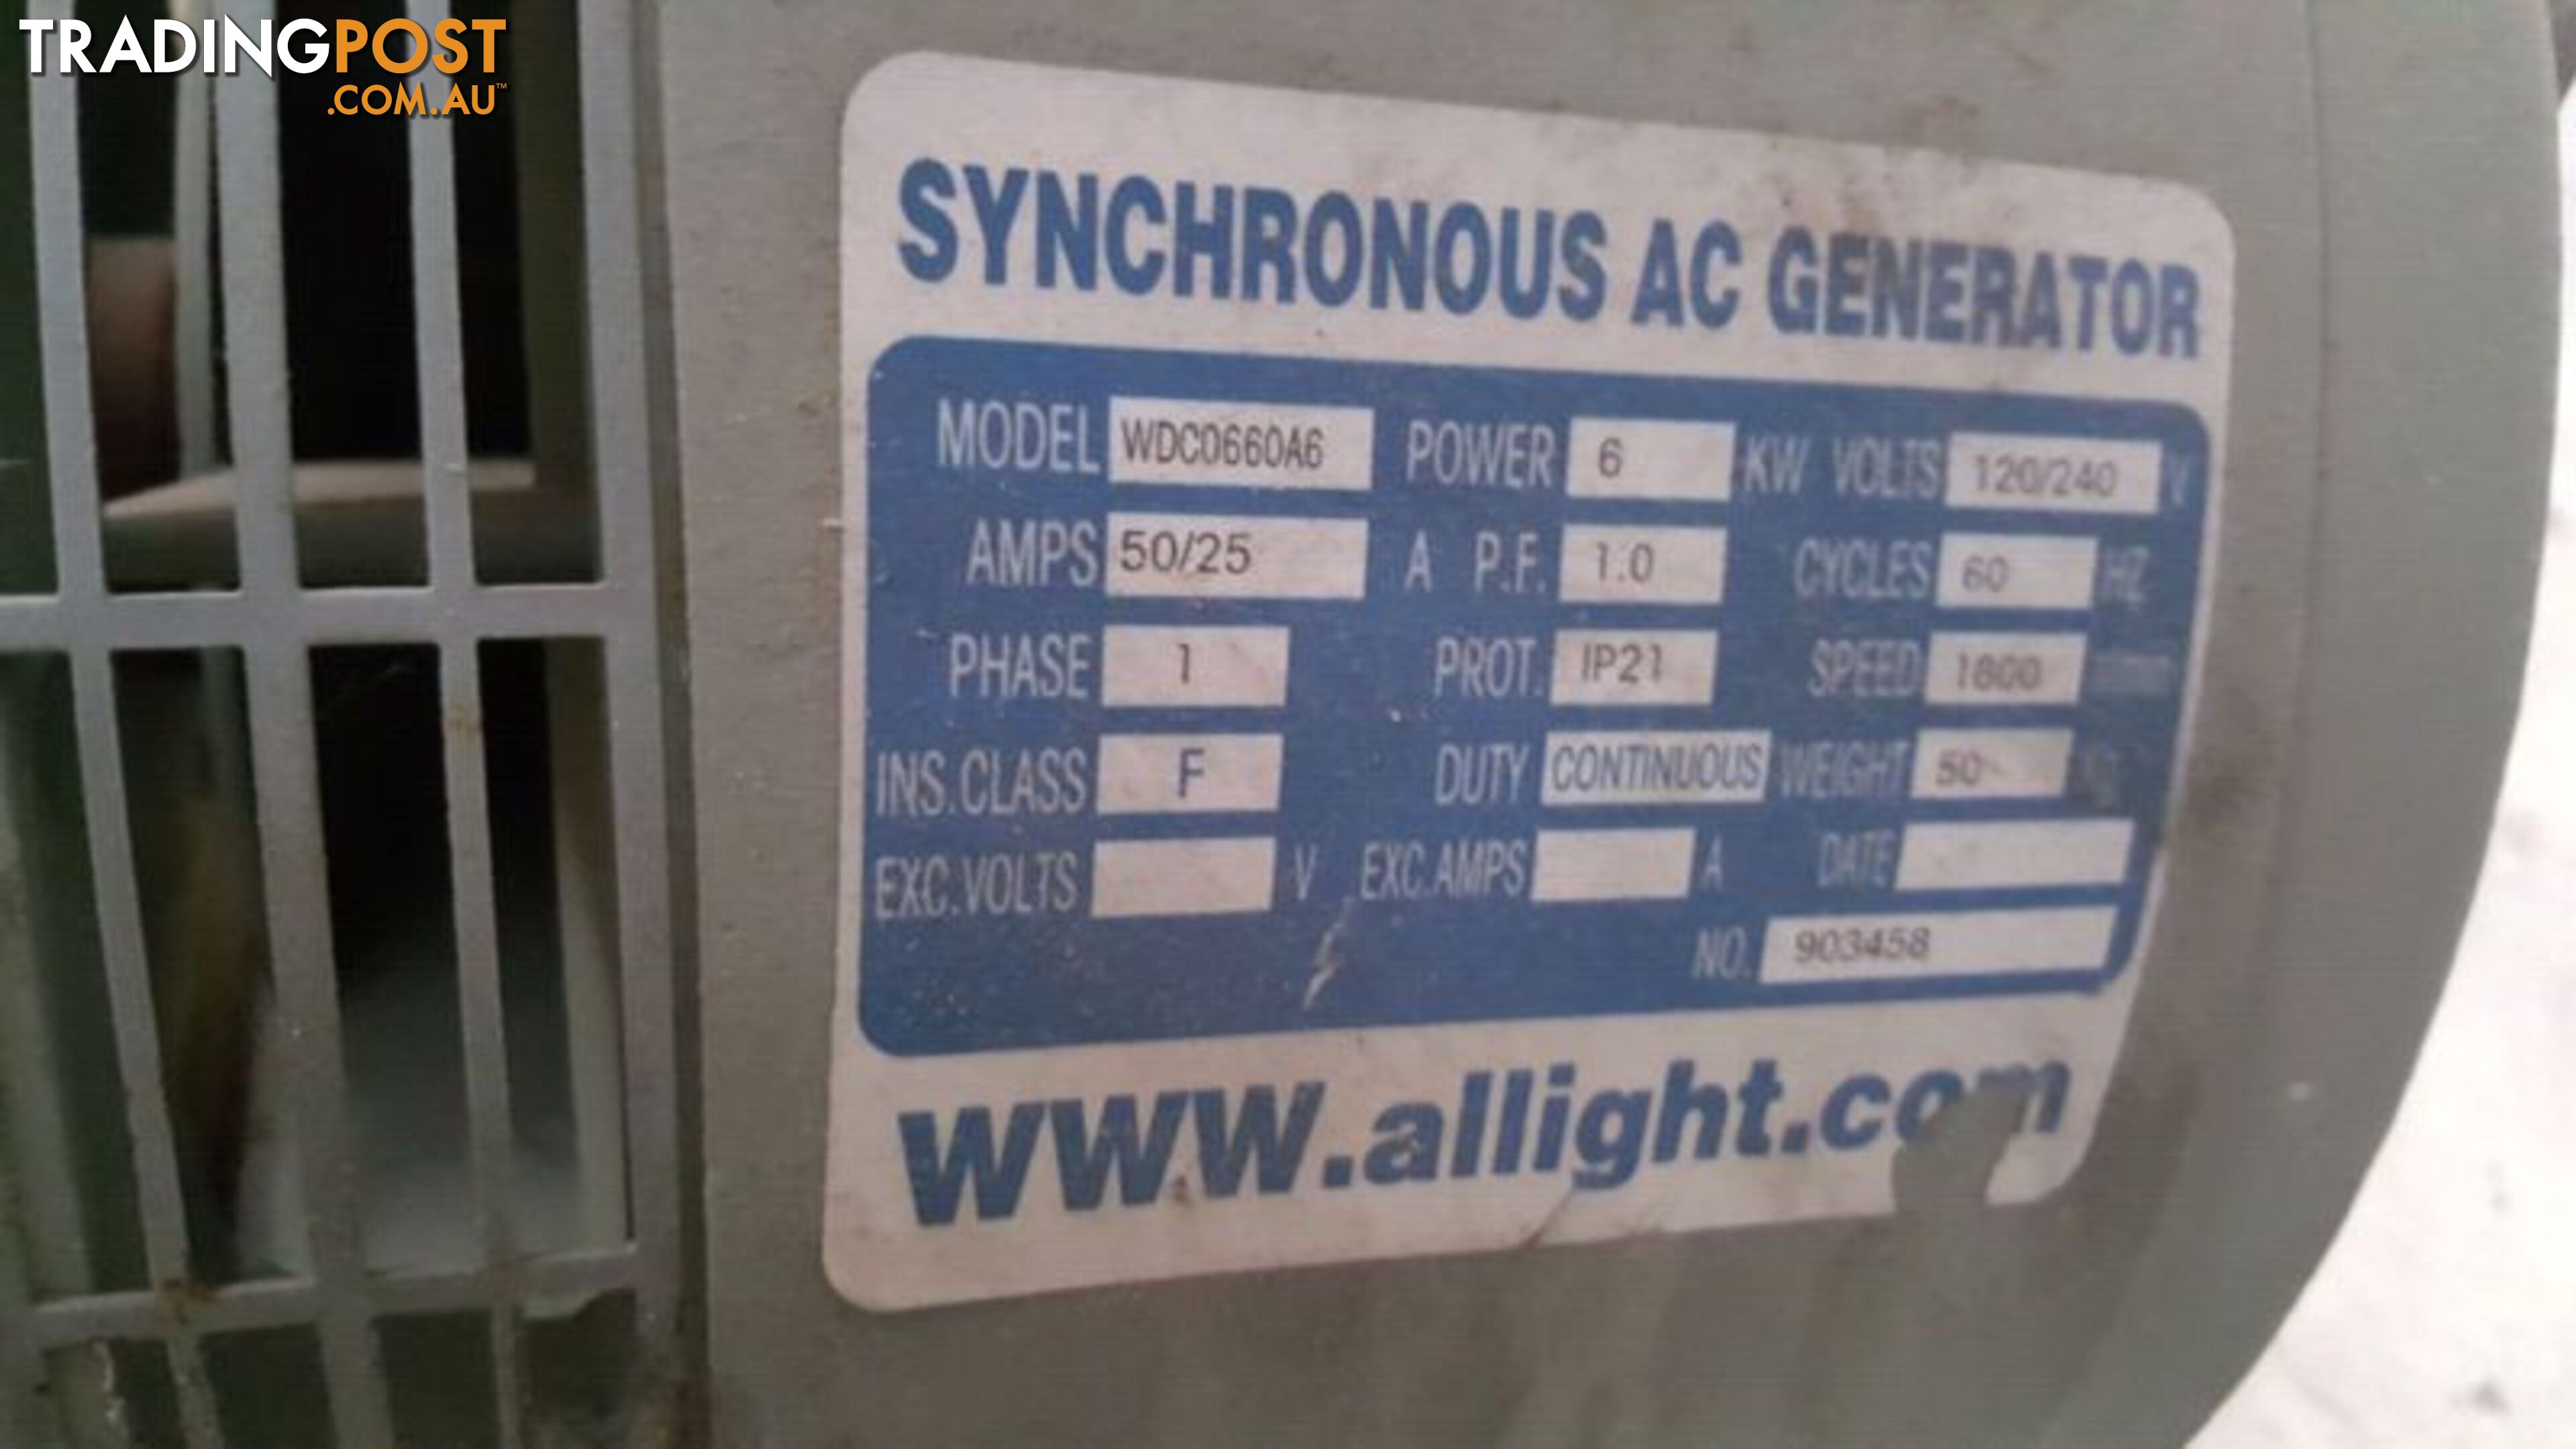 Synchronous AC Generator Model WDC0660A6